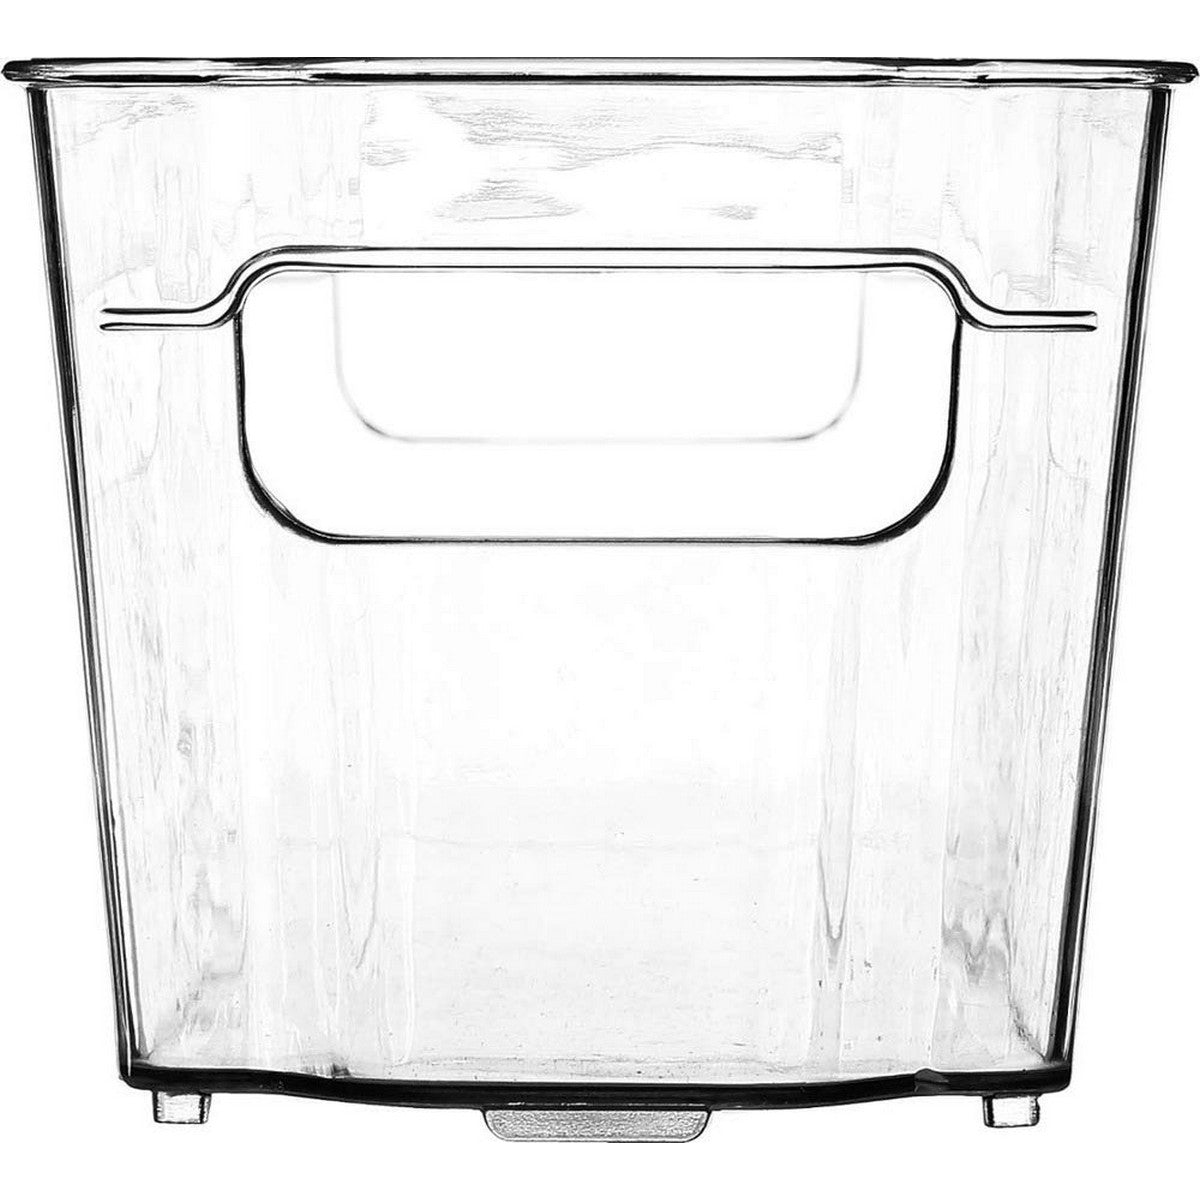 Organiser voor de koelkast 5five Transparant PET Polyethyleentereftalaat (PET) 4 L 37 x 11 cm